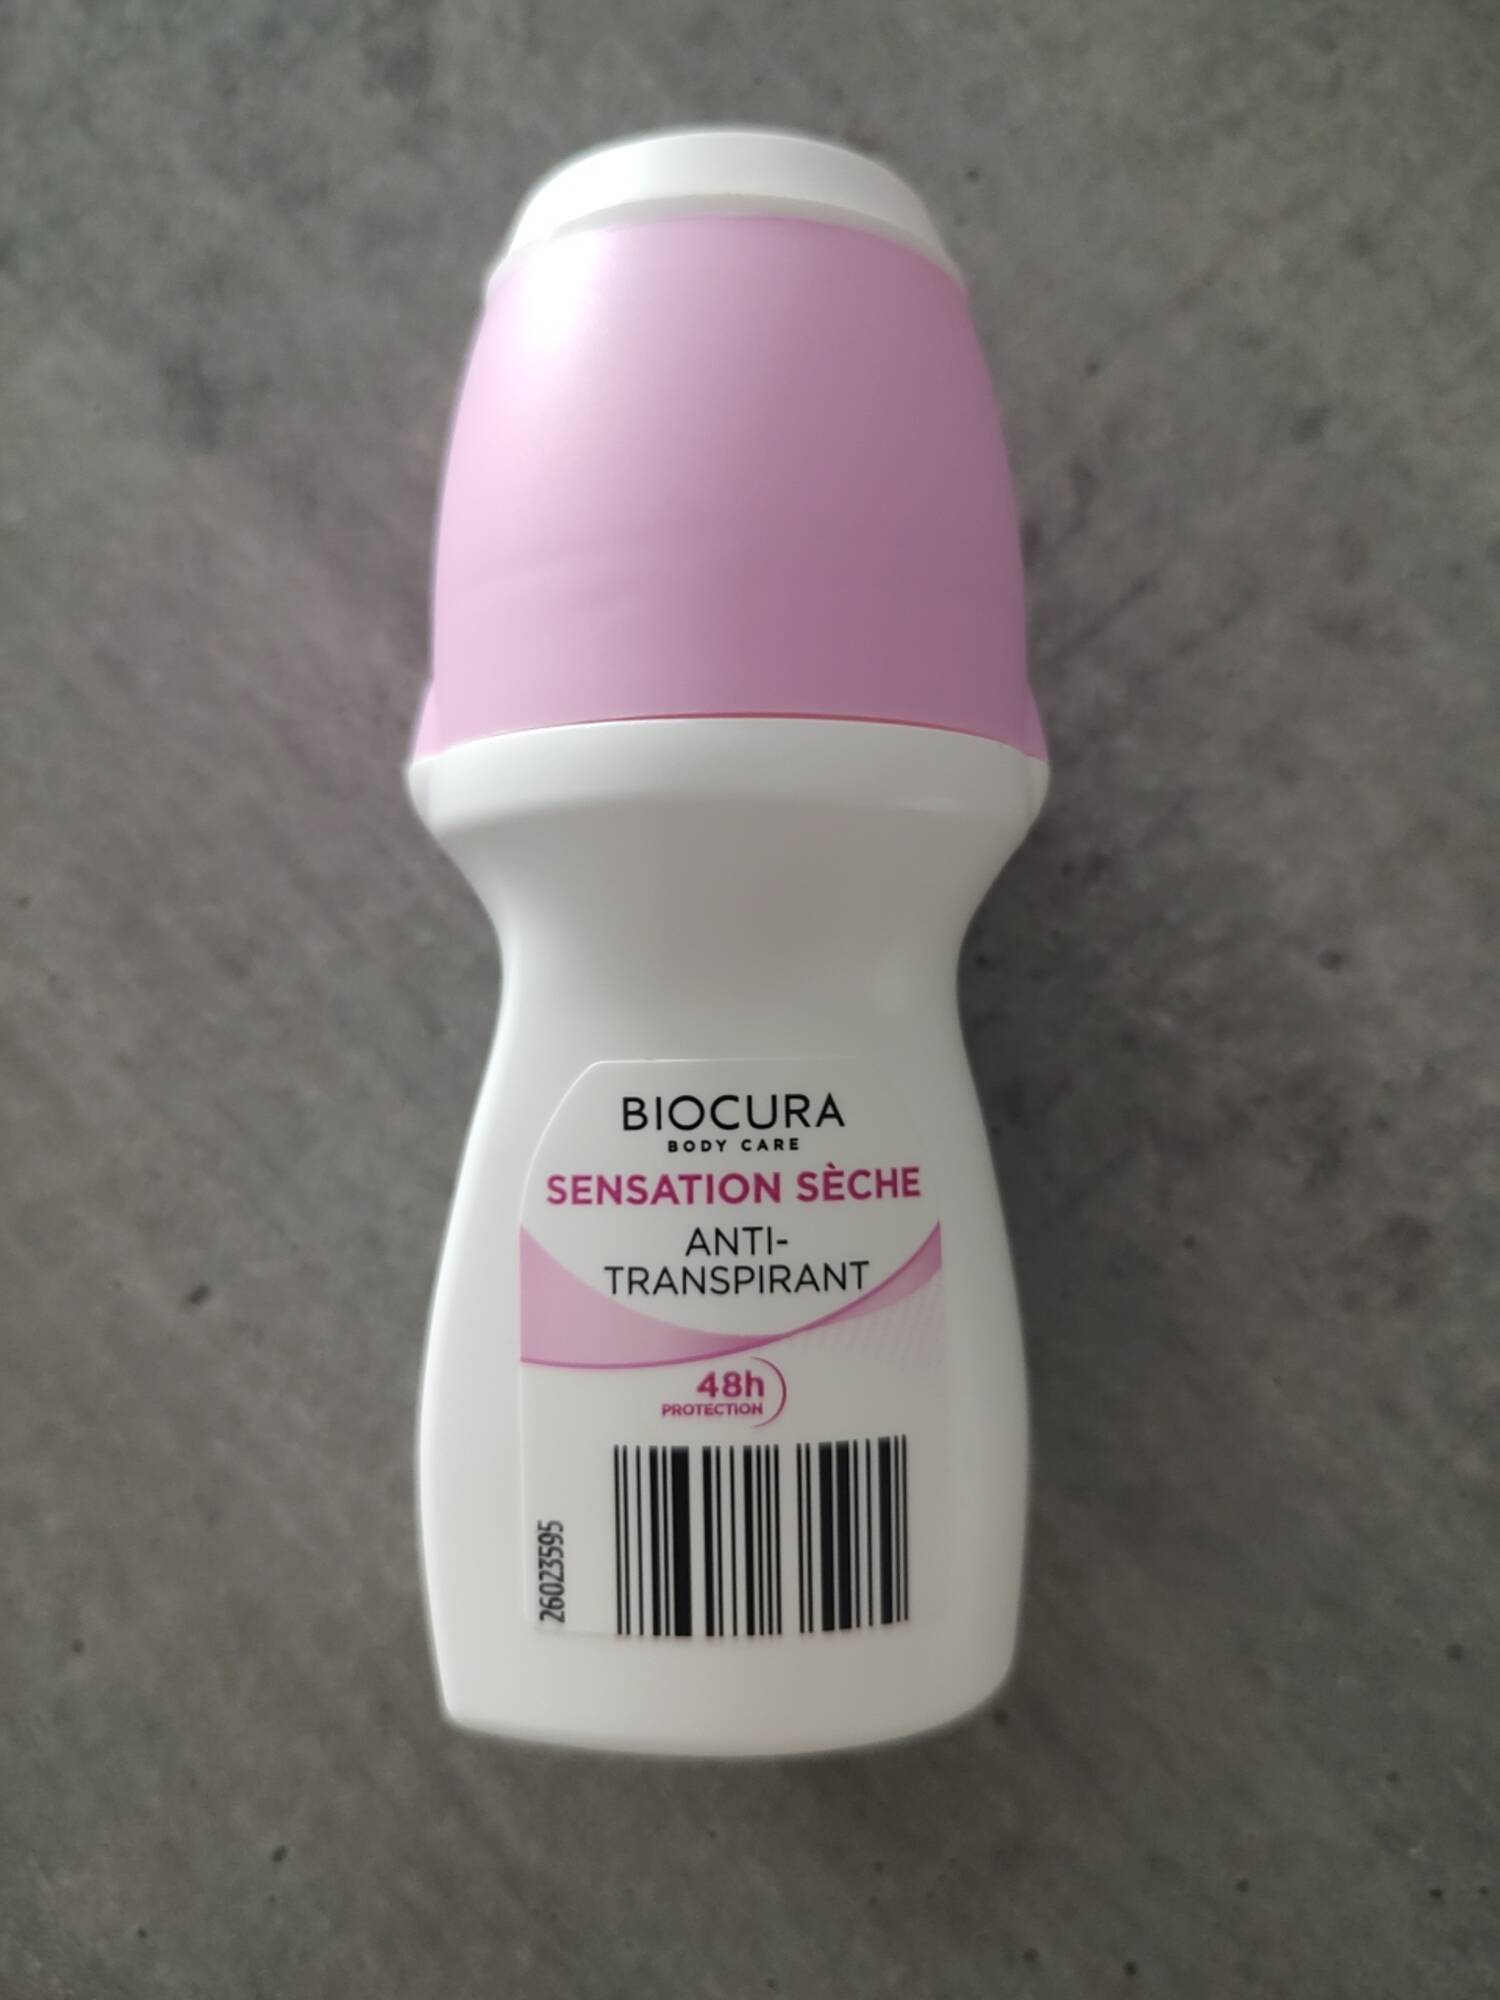 BIOCURA - Sensation sèche Anti-transpirant - Protection 48h